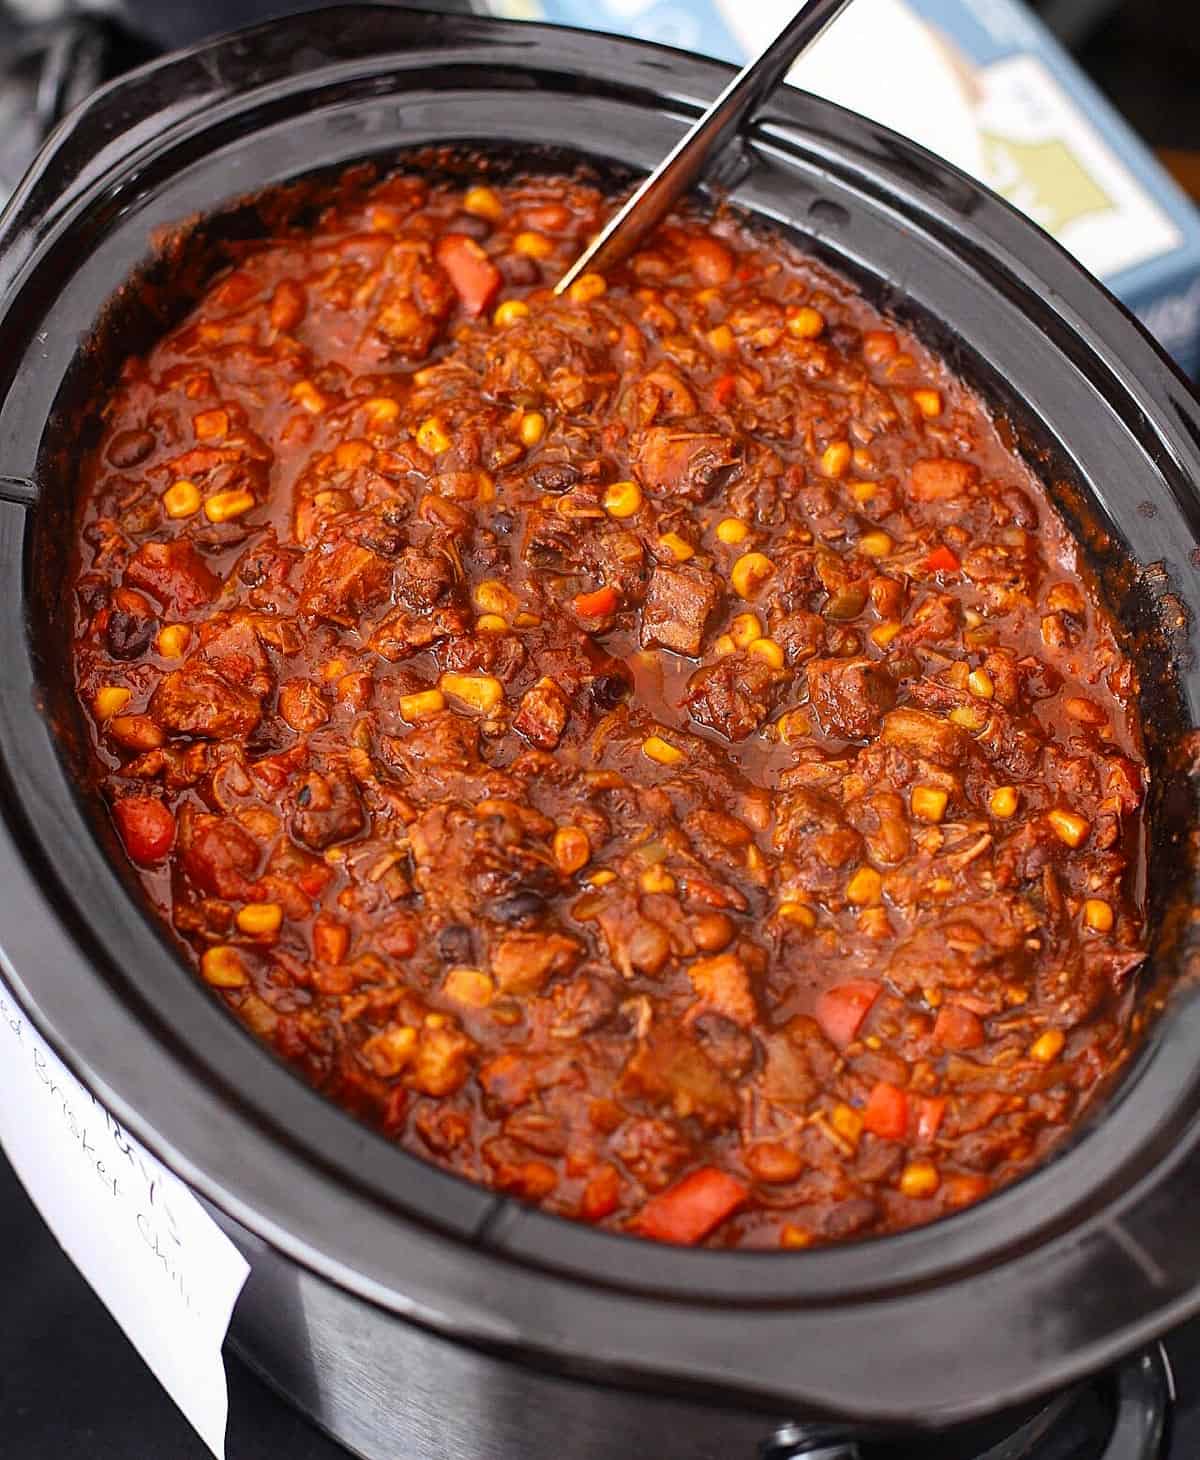 Smoked Brisket Chili in a crockpot